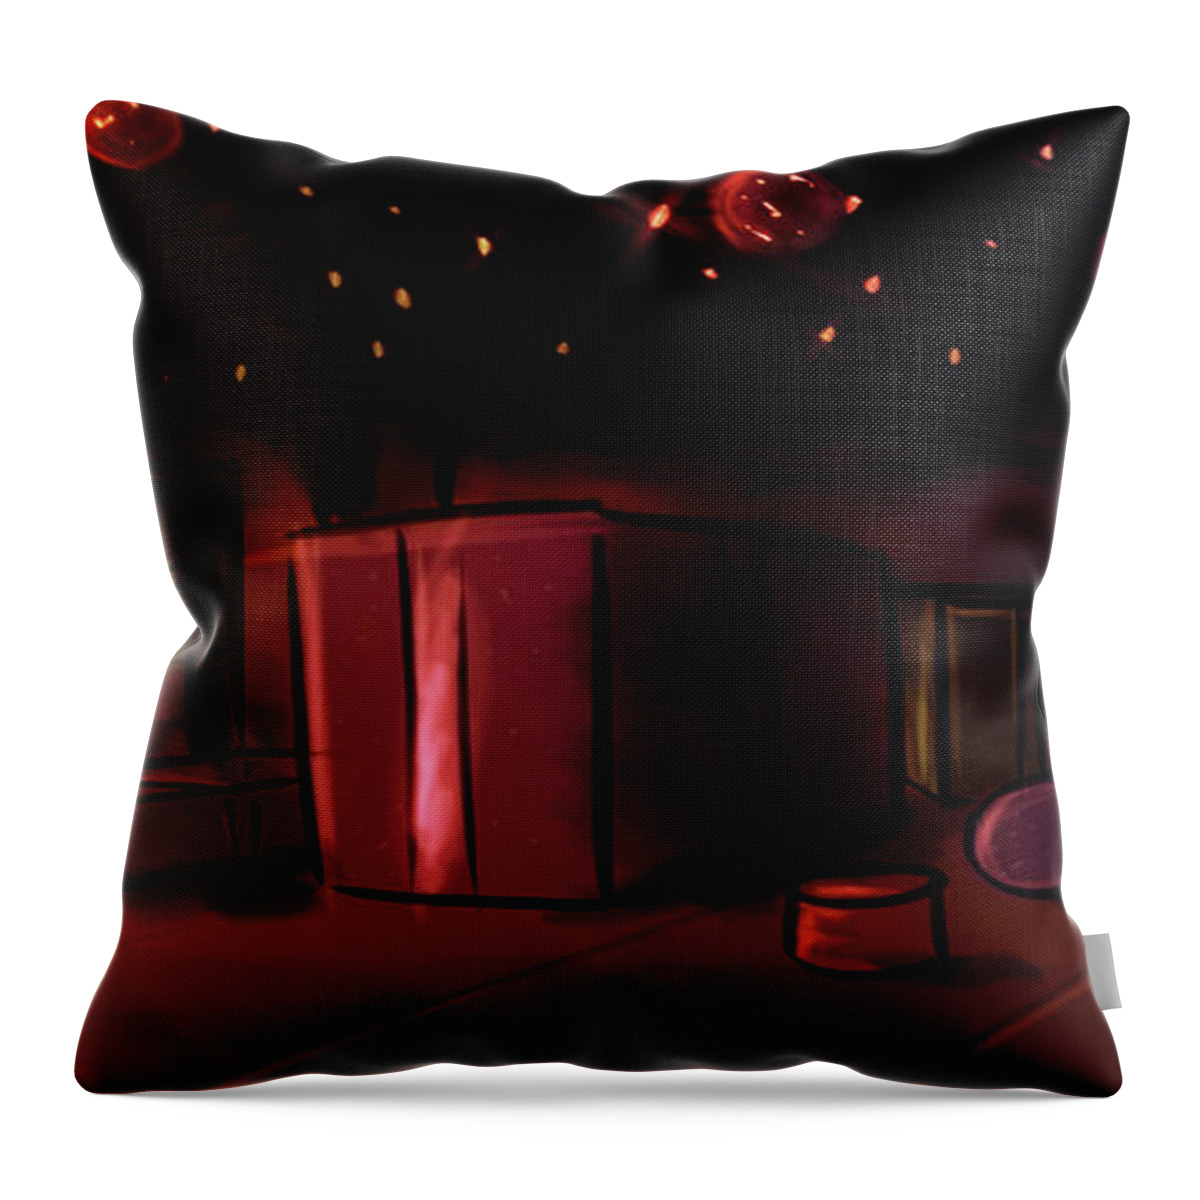 Christmas Throw Pillow featuring the digital art Art - Christmas Presents by Matthias Zegveld